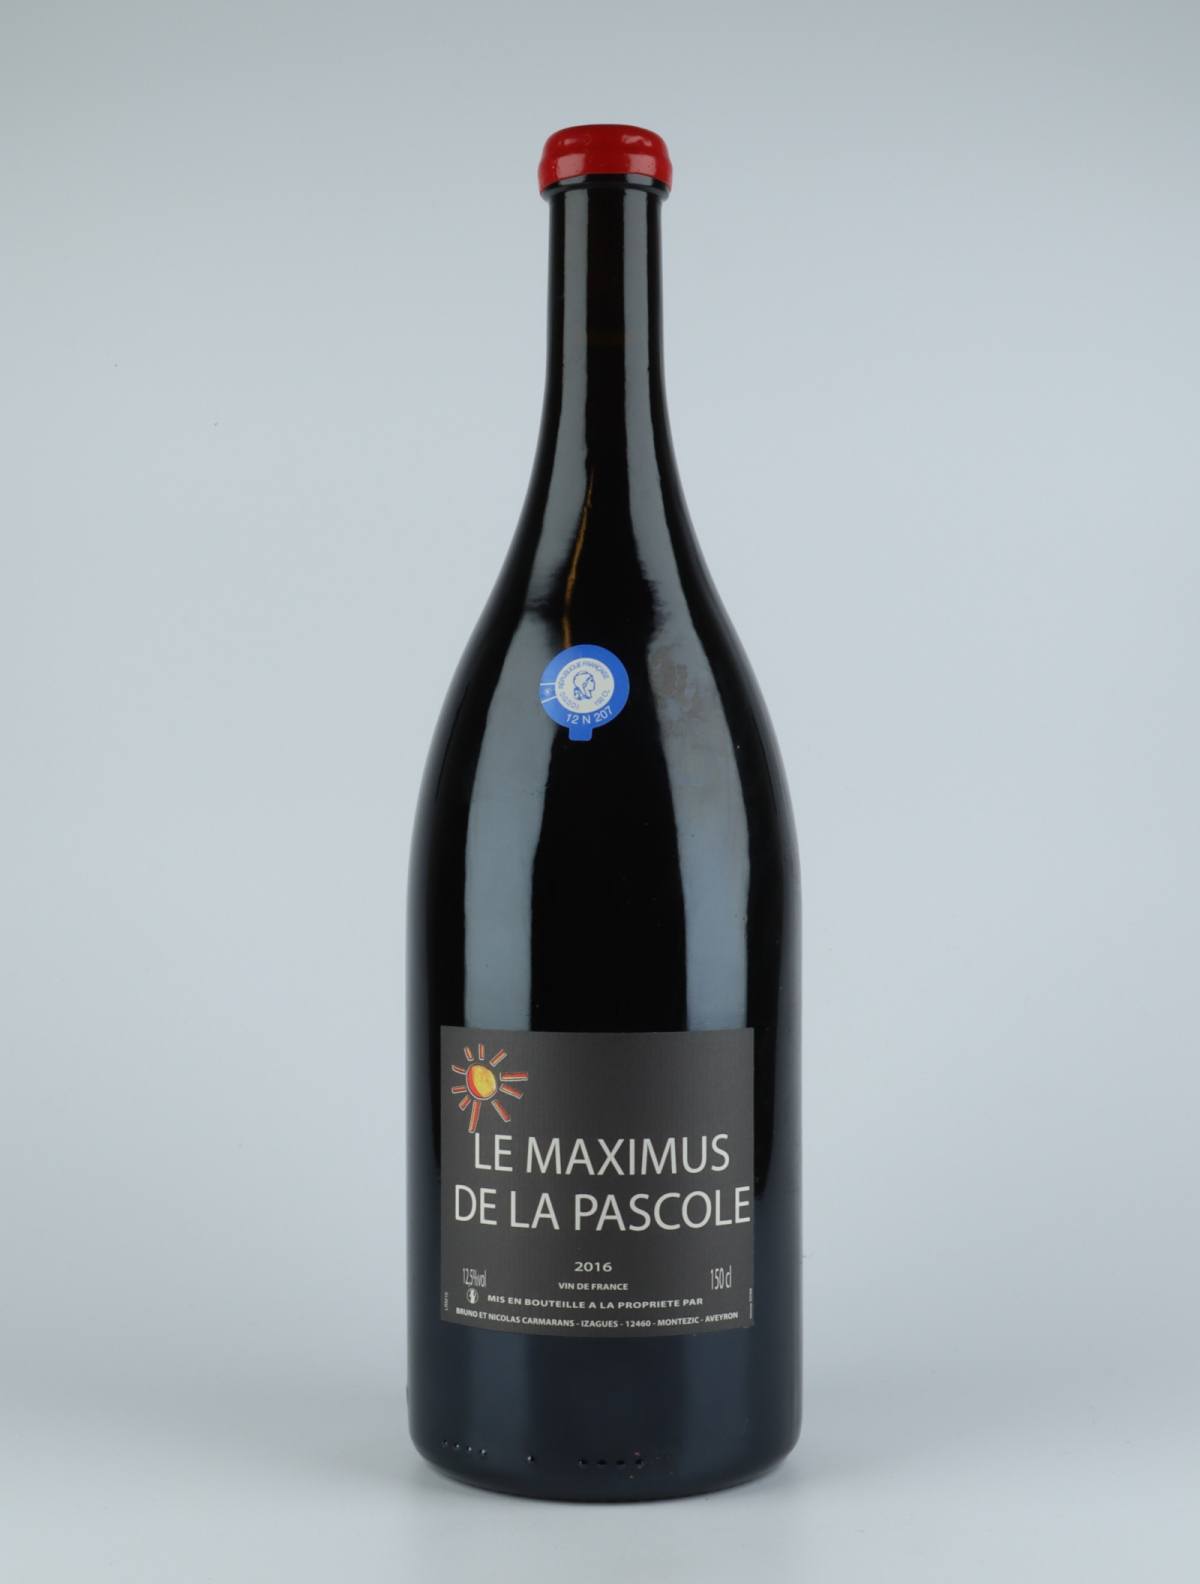 A bottle 2016 Maximus de la Pascole Red wine from Bruno Duchêne, Rousillon in France